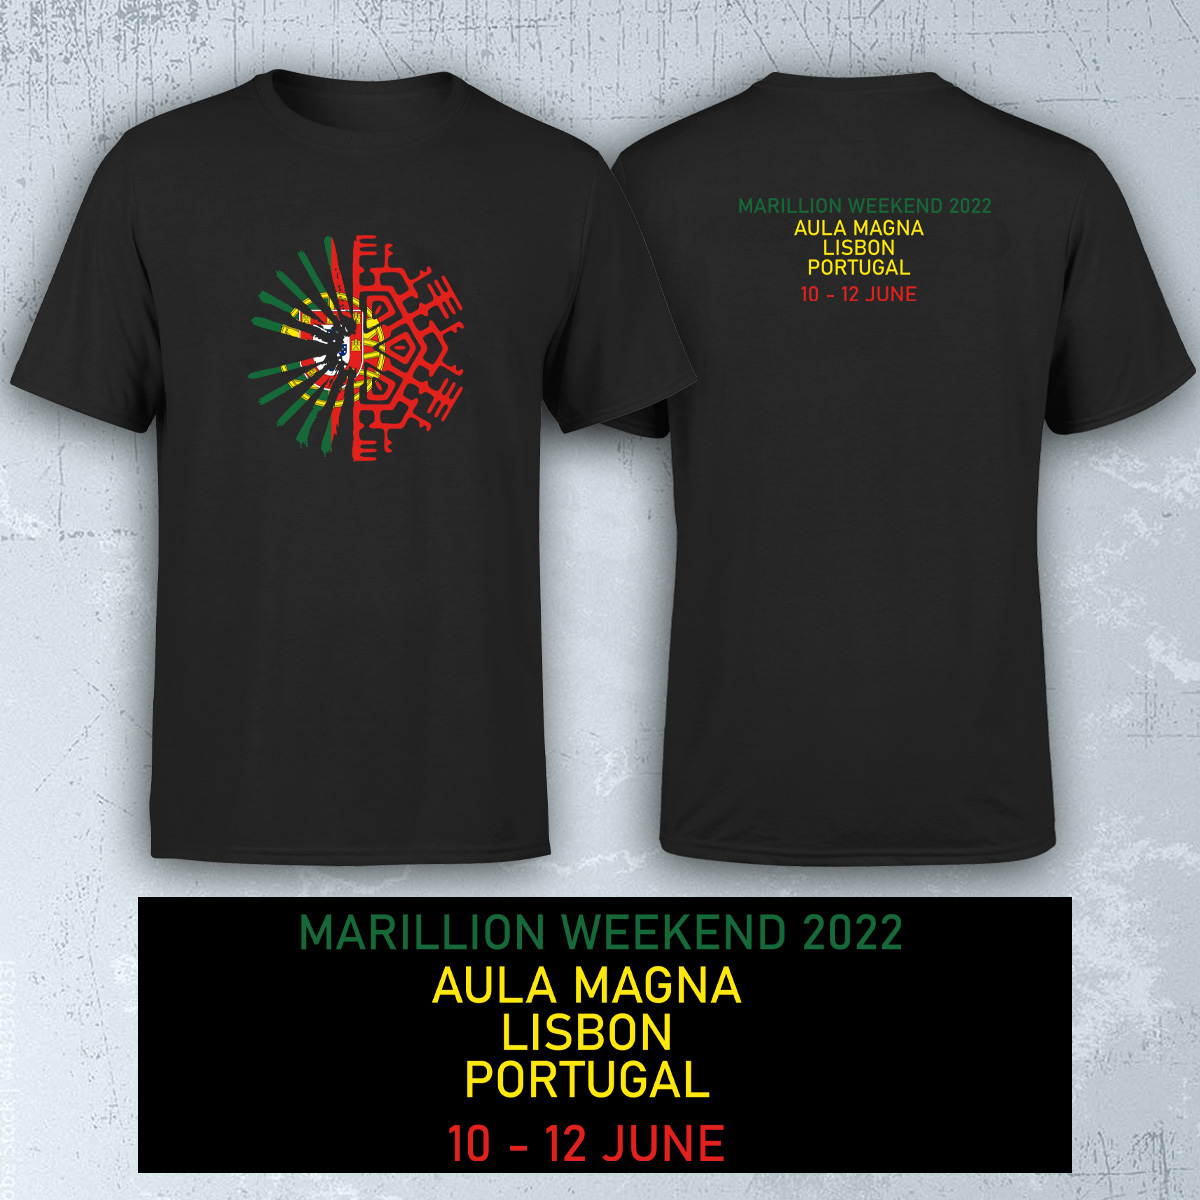 MW 2022 - Portugal Shirts Men's Men's Black T-Shirt